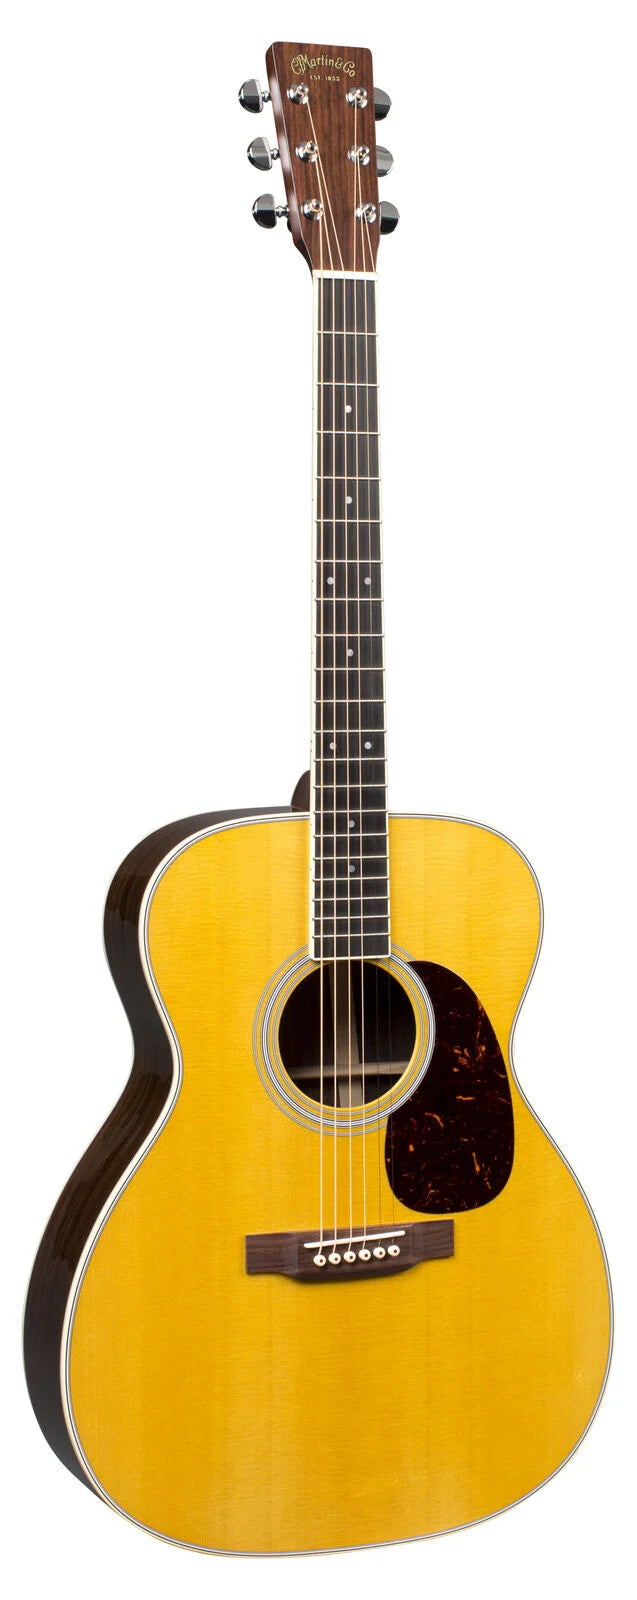 Martin M-36 acoustic guitar 